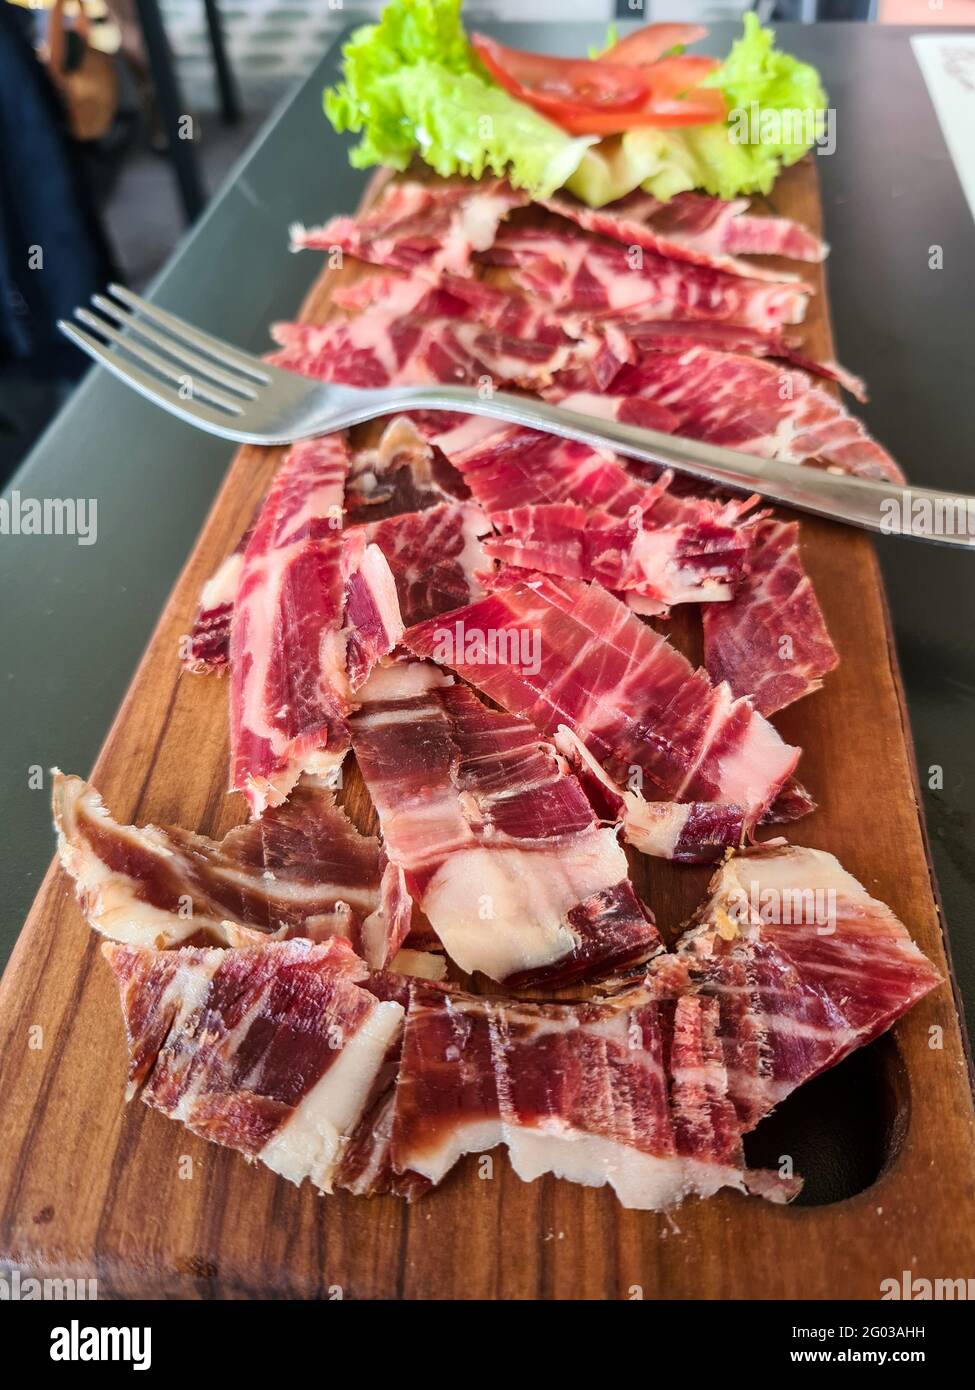 Patanegra prosciutto, luxury Ham from Spain Stock Photo - Alamy